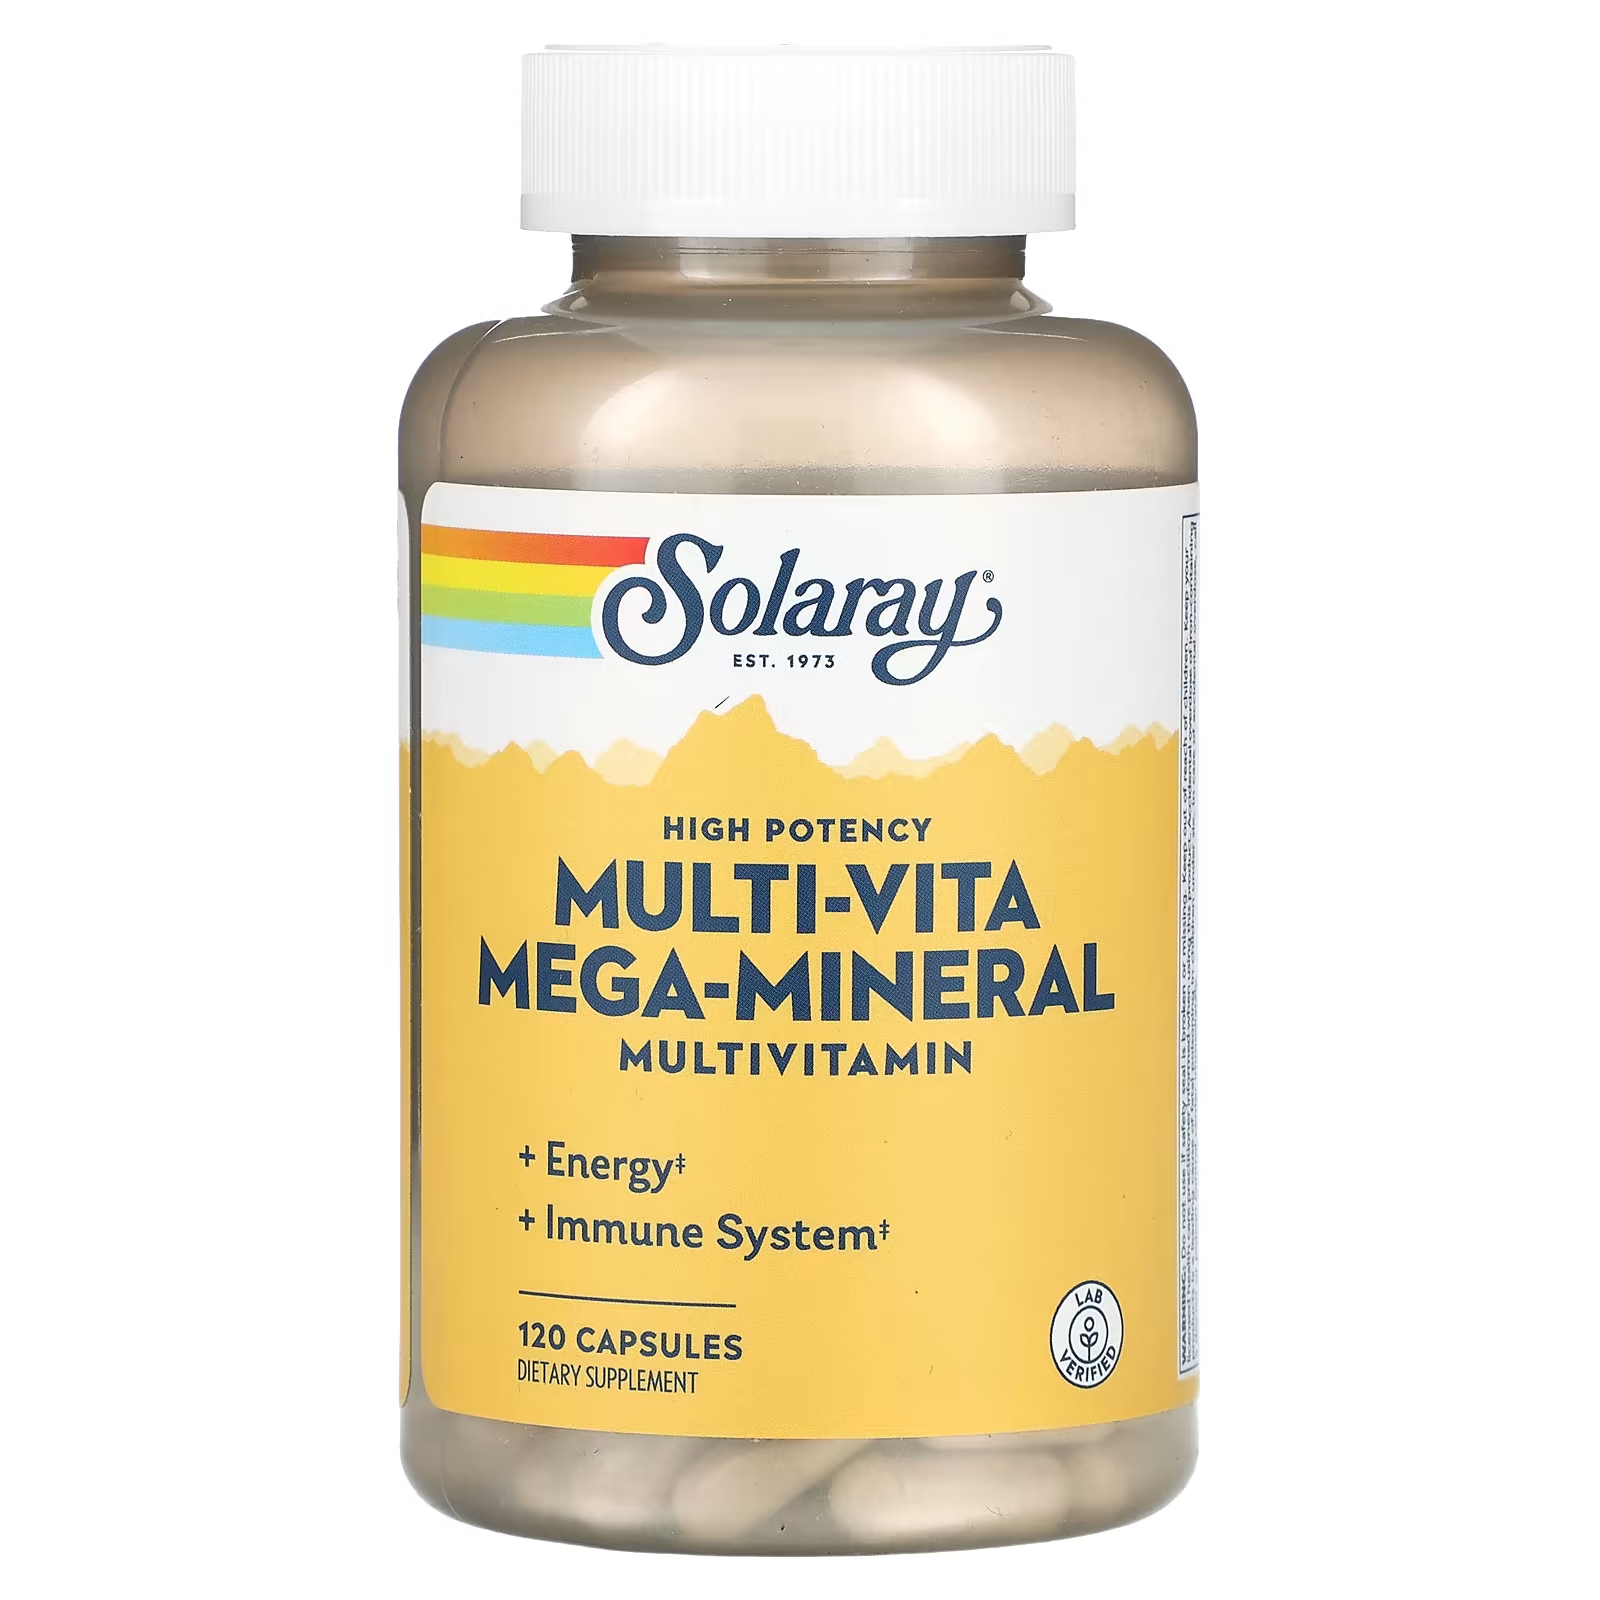 Мега-минеральные мультивитамины Solaray Multi-Vita, 120 капсул solaray high potency multi vita mega mineral мультивитамины 120 капсул